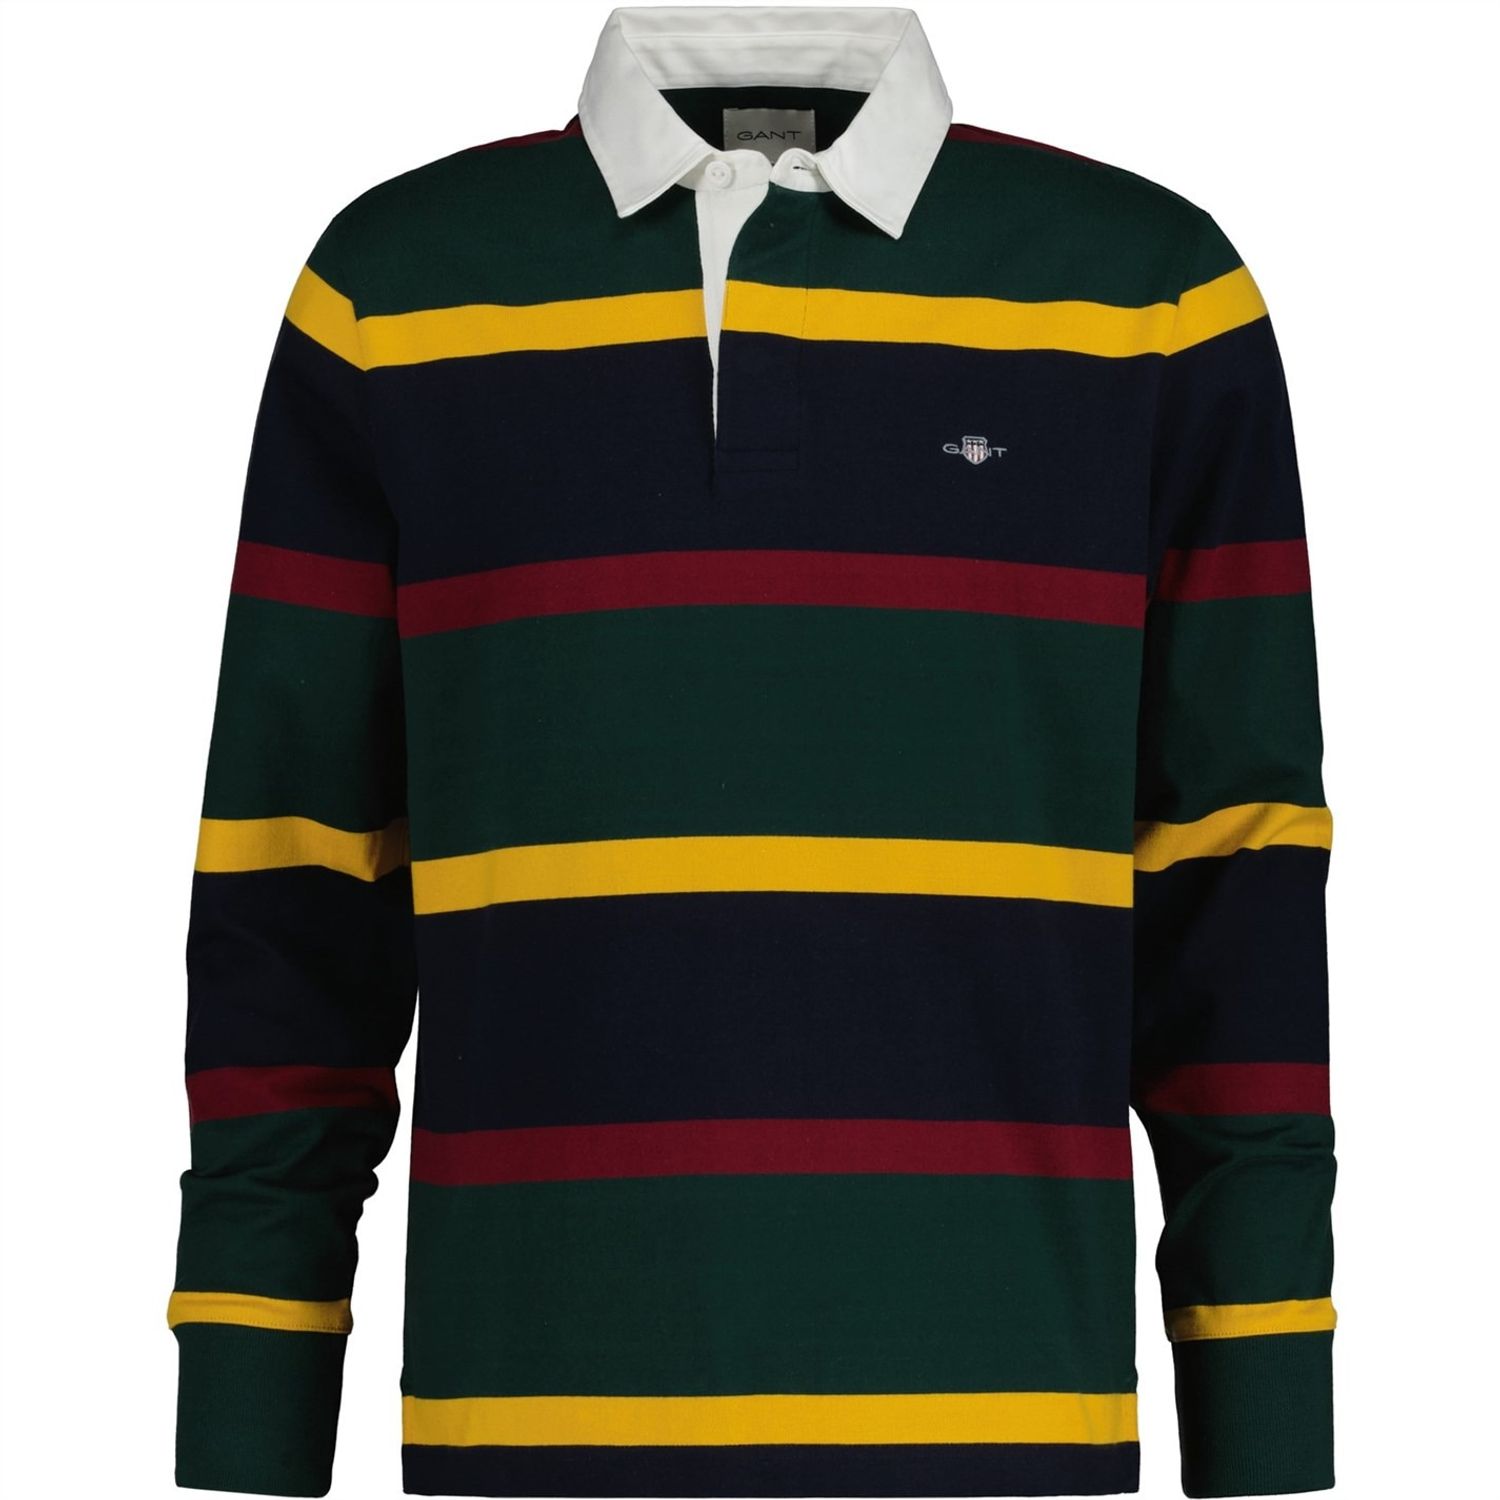 Gant Rugby Striped Shirt Longsleeve 